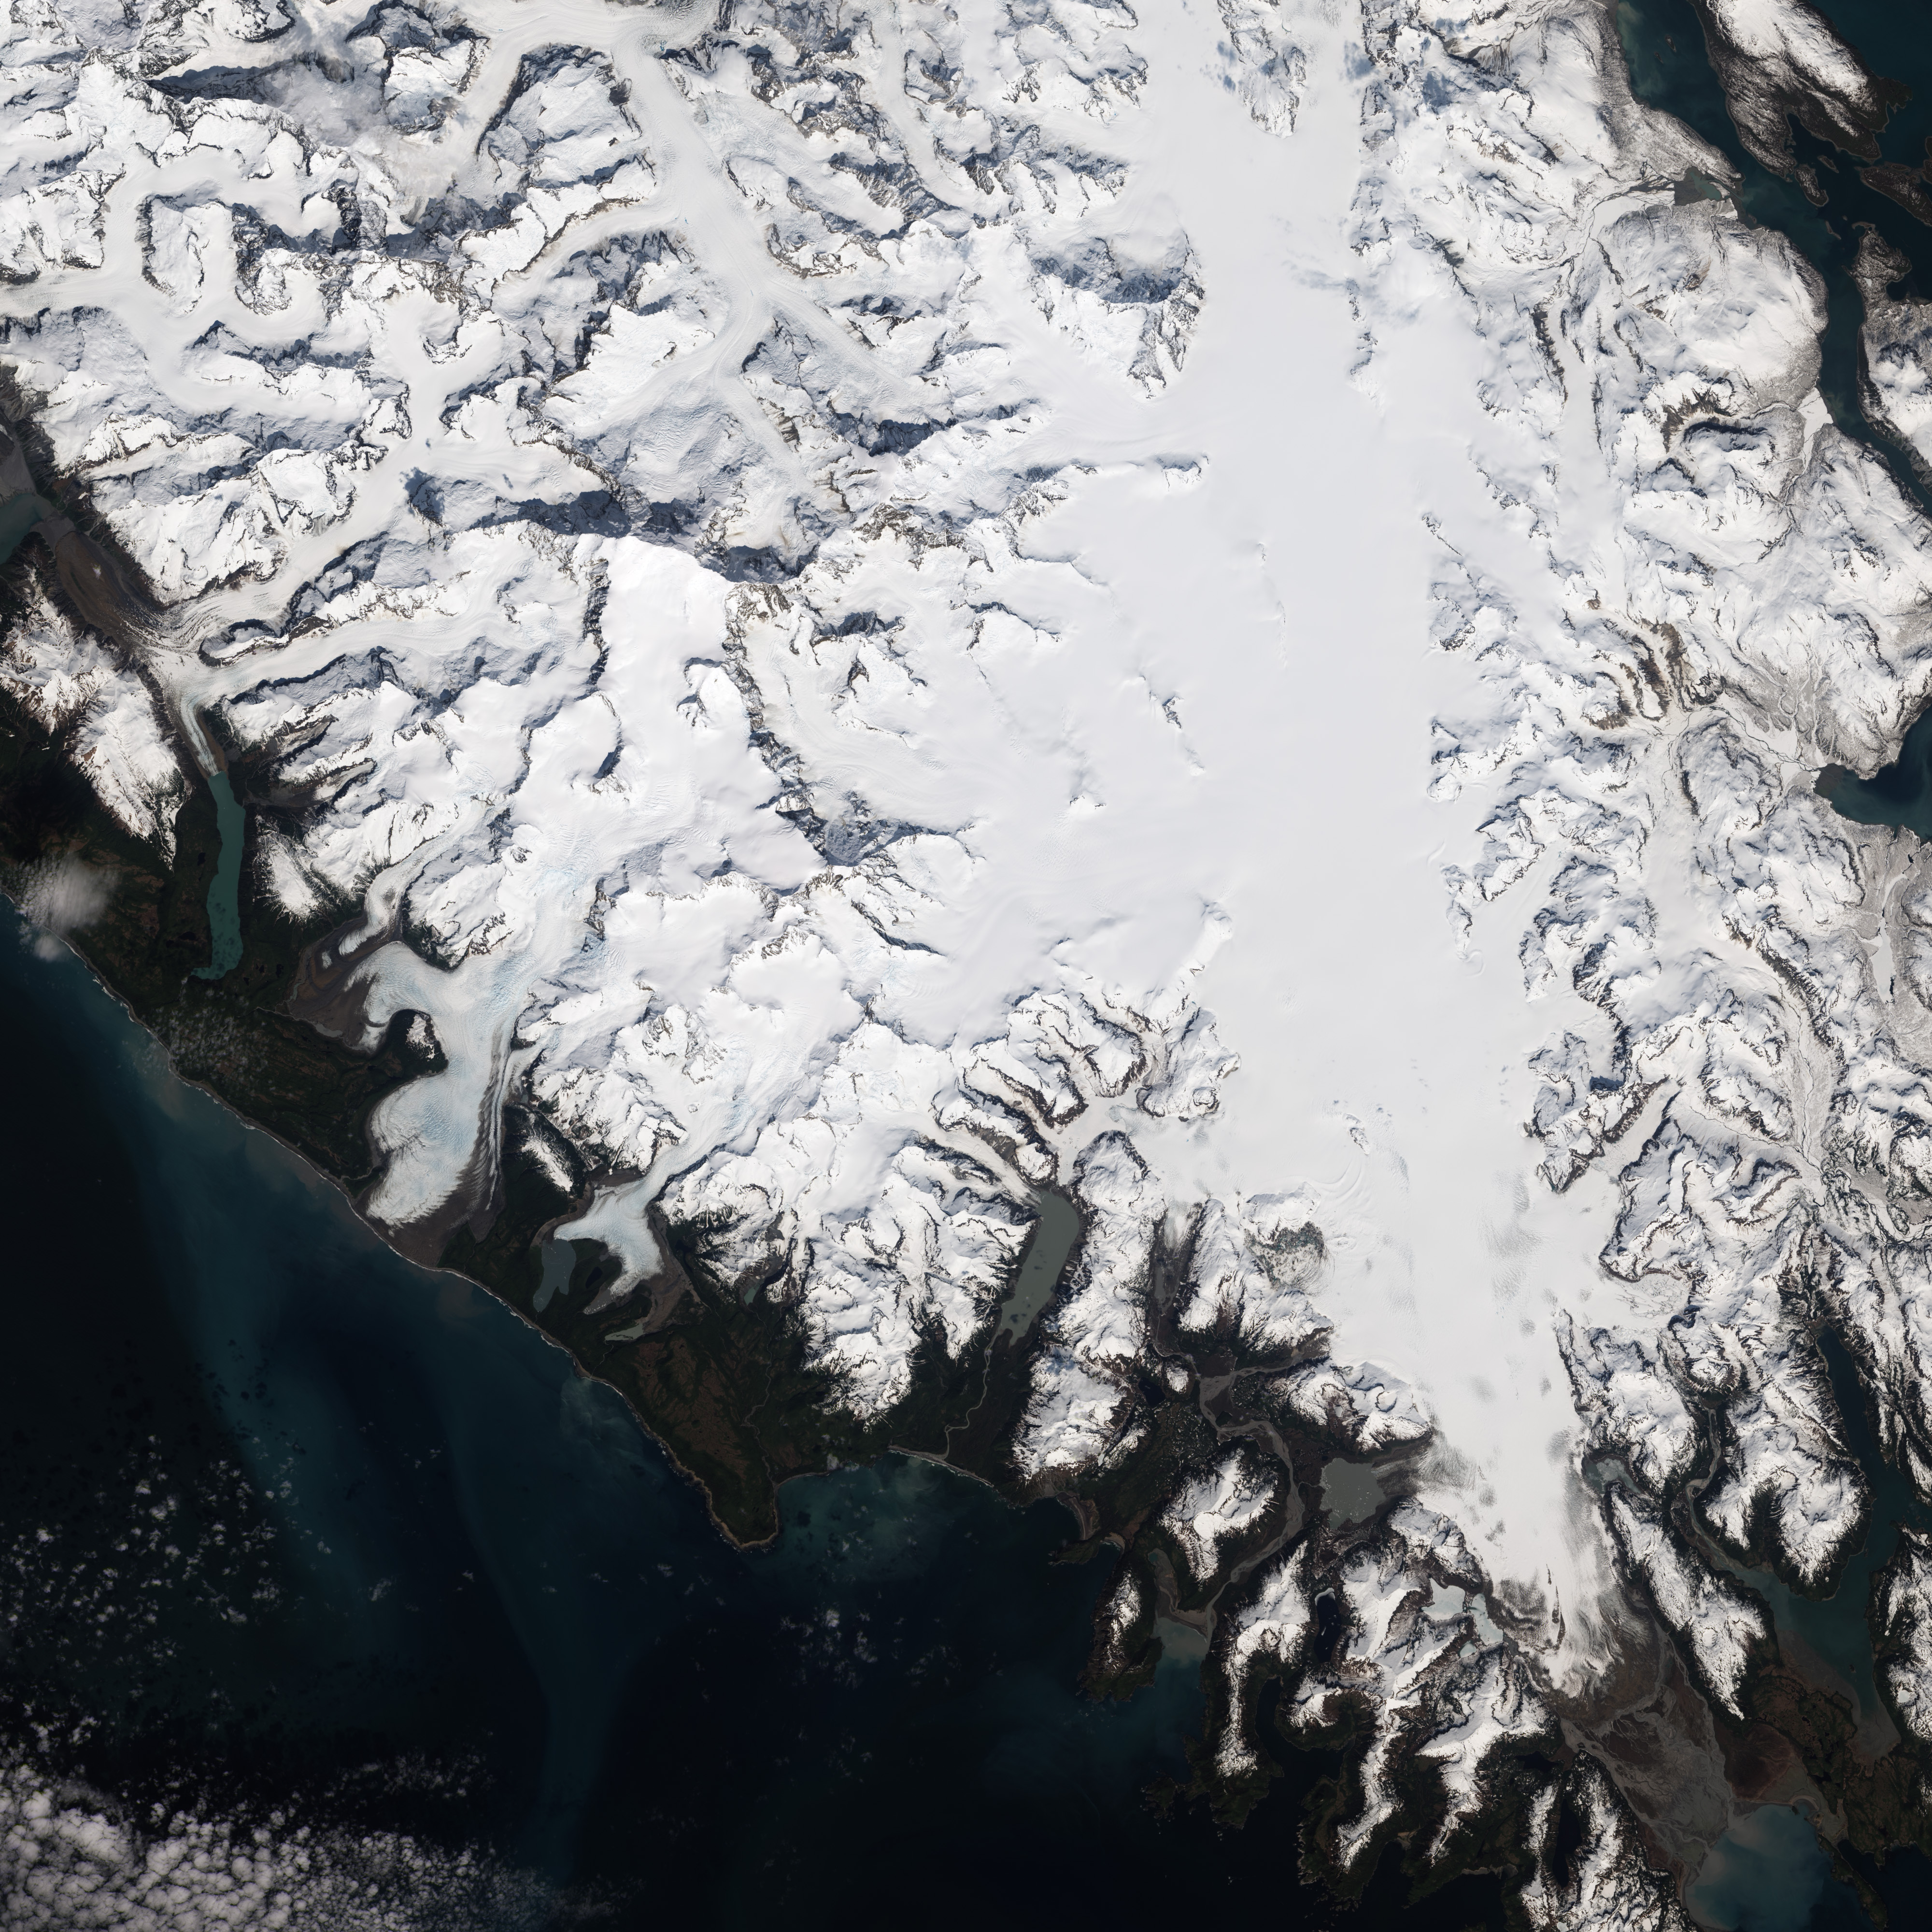 Large Landslide Detected in Southeastern Alaska - related image preview